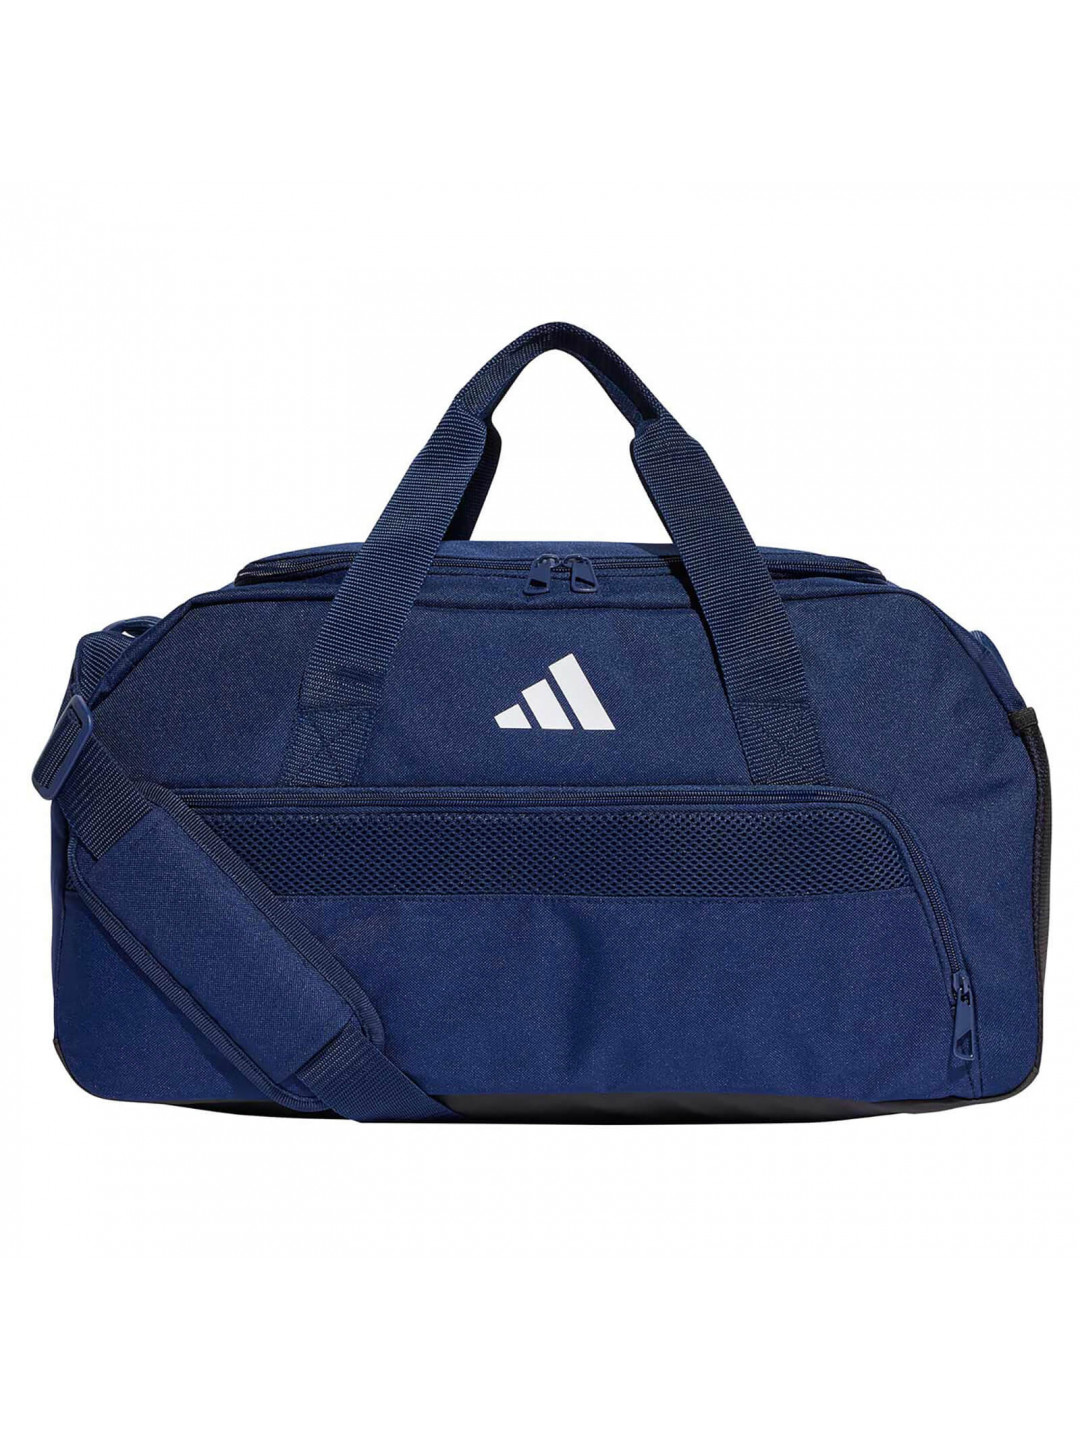 Sportovní taška Adidas Philip – modrá